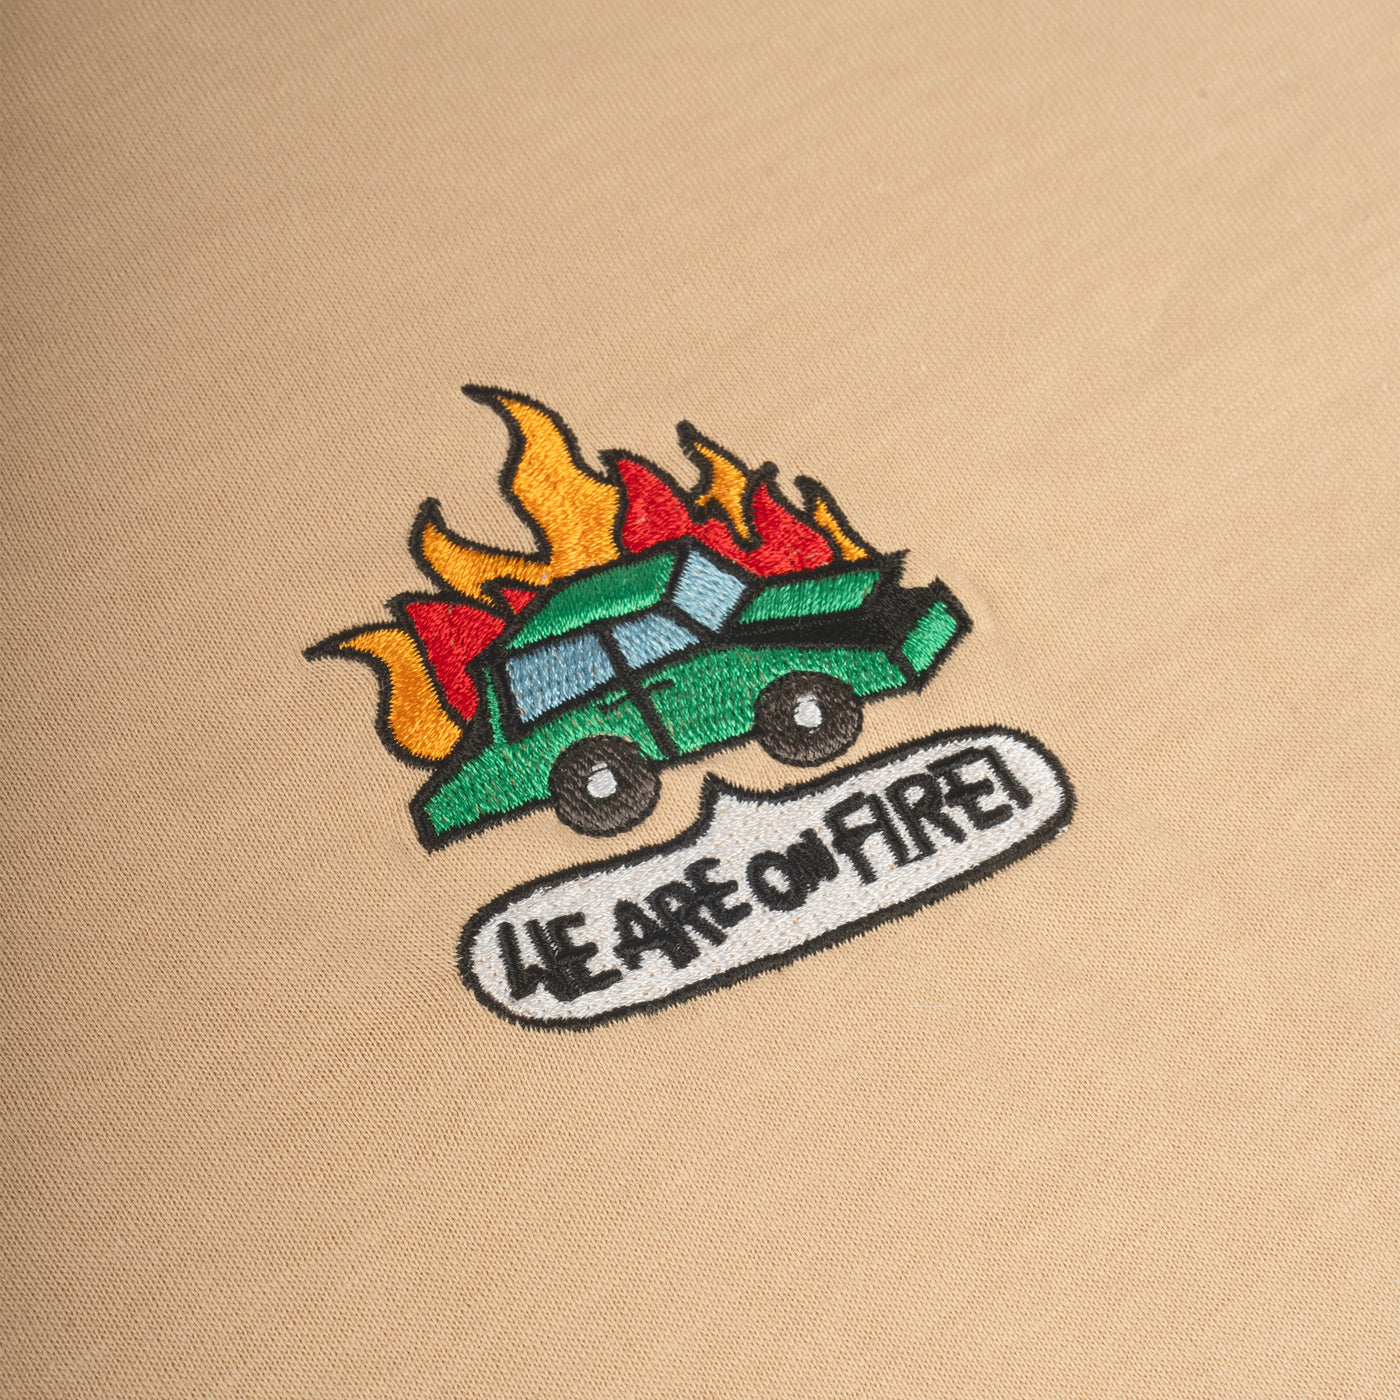 We are on fire - Camiseta